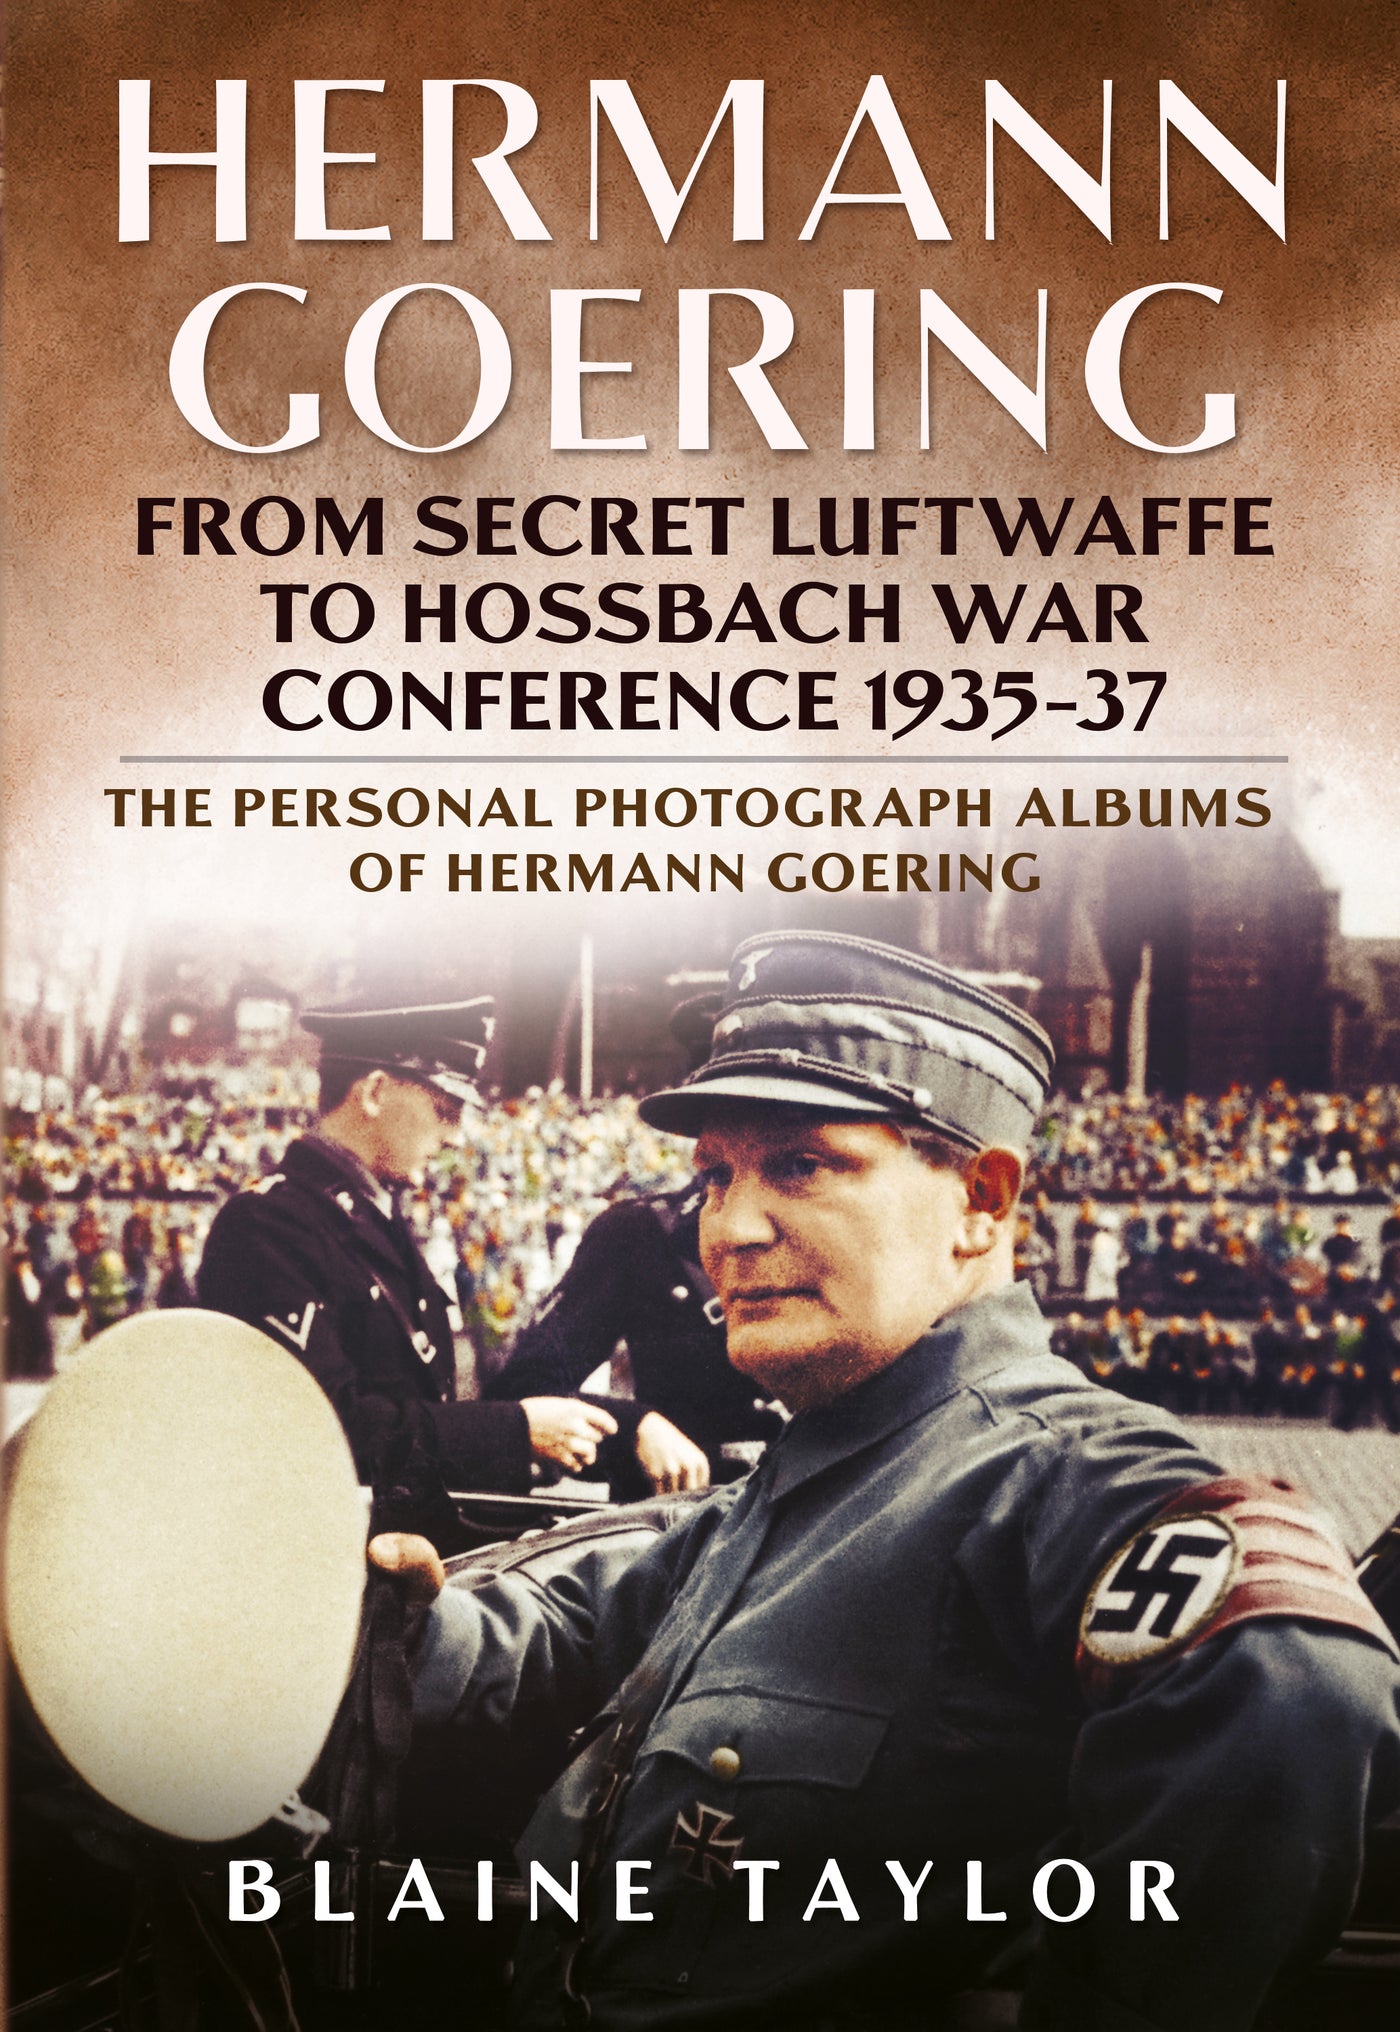 Hermann Goering: From Secret Luftwaffe to Hossbach War Conference 1935-37